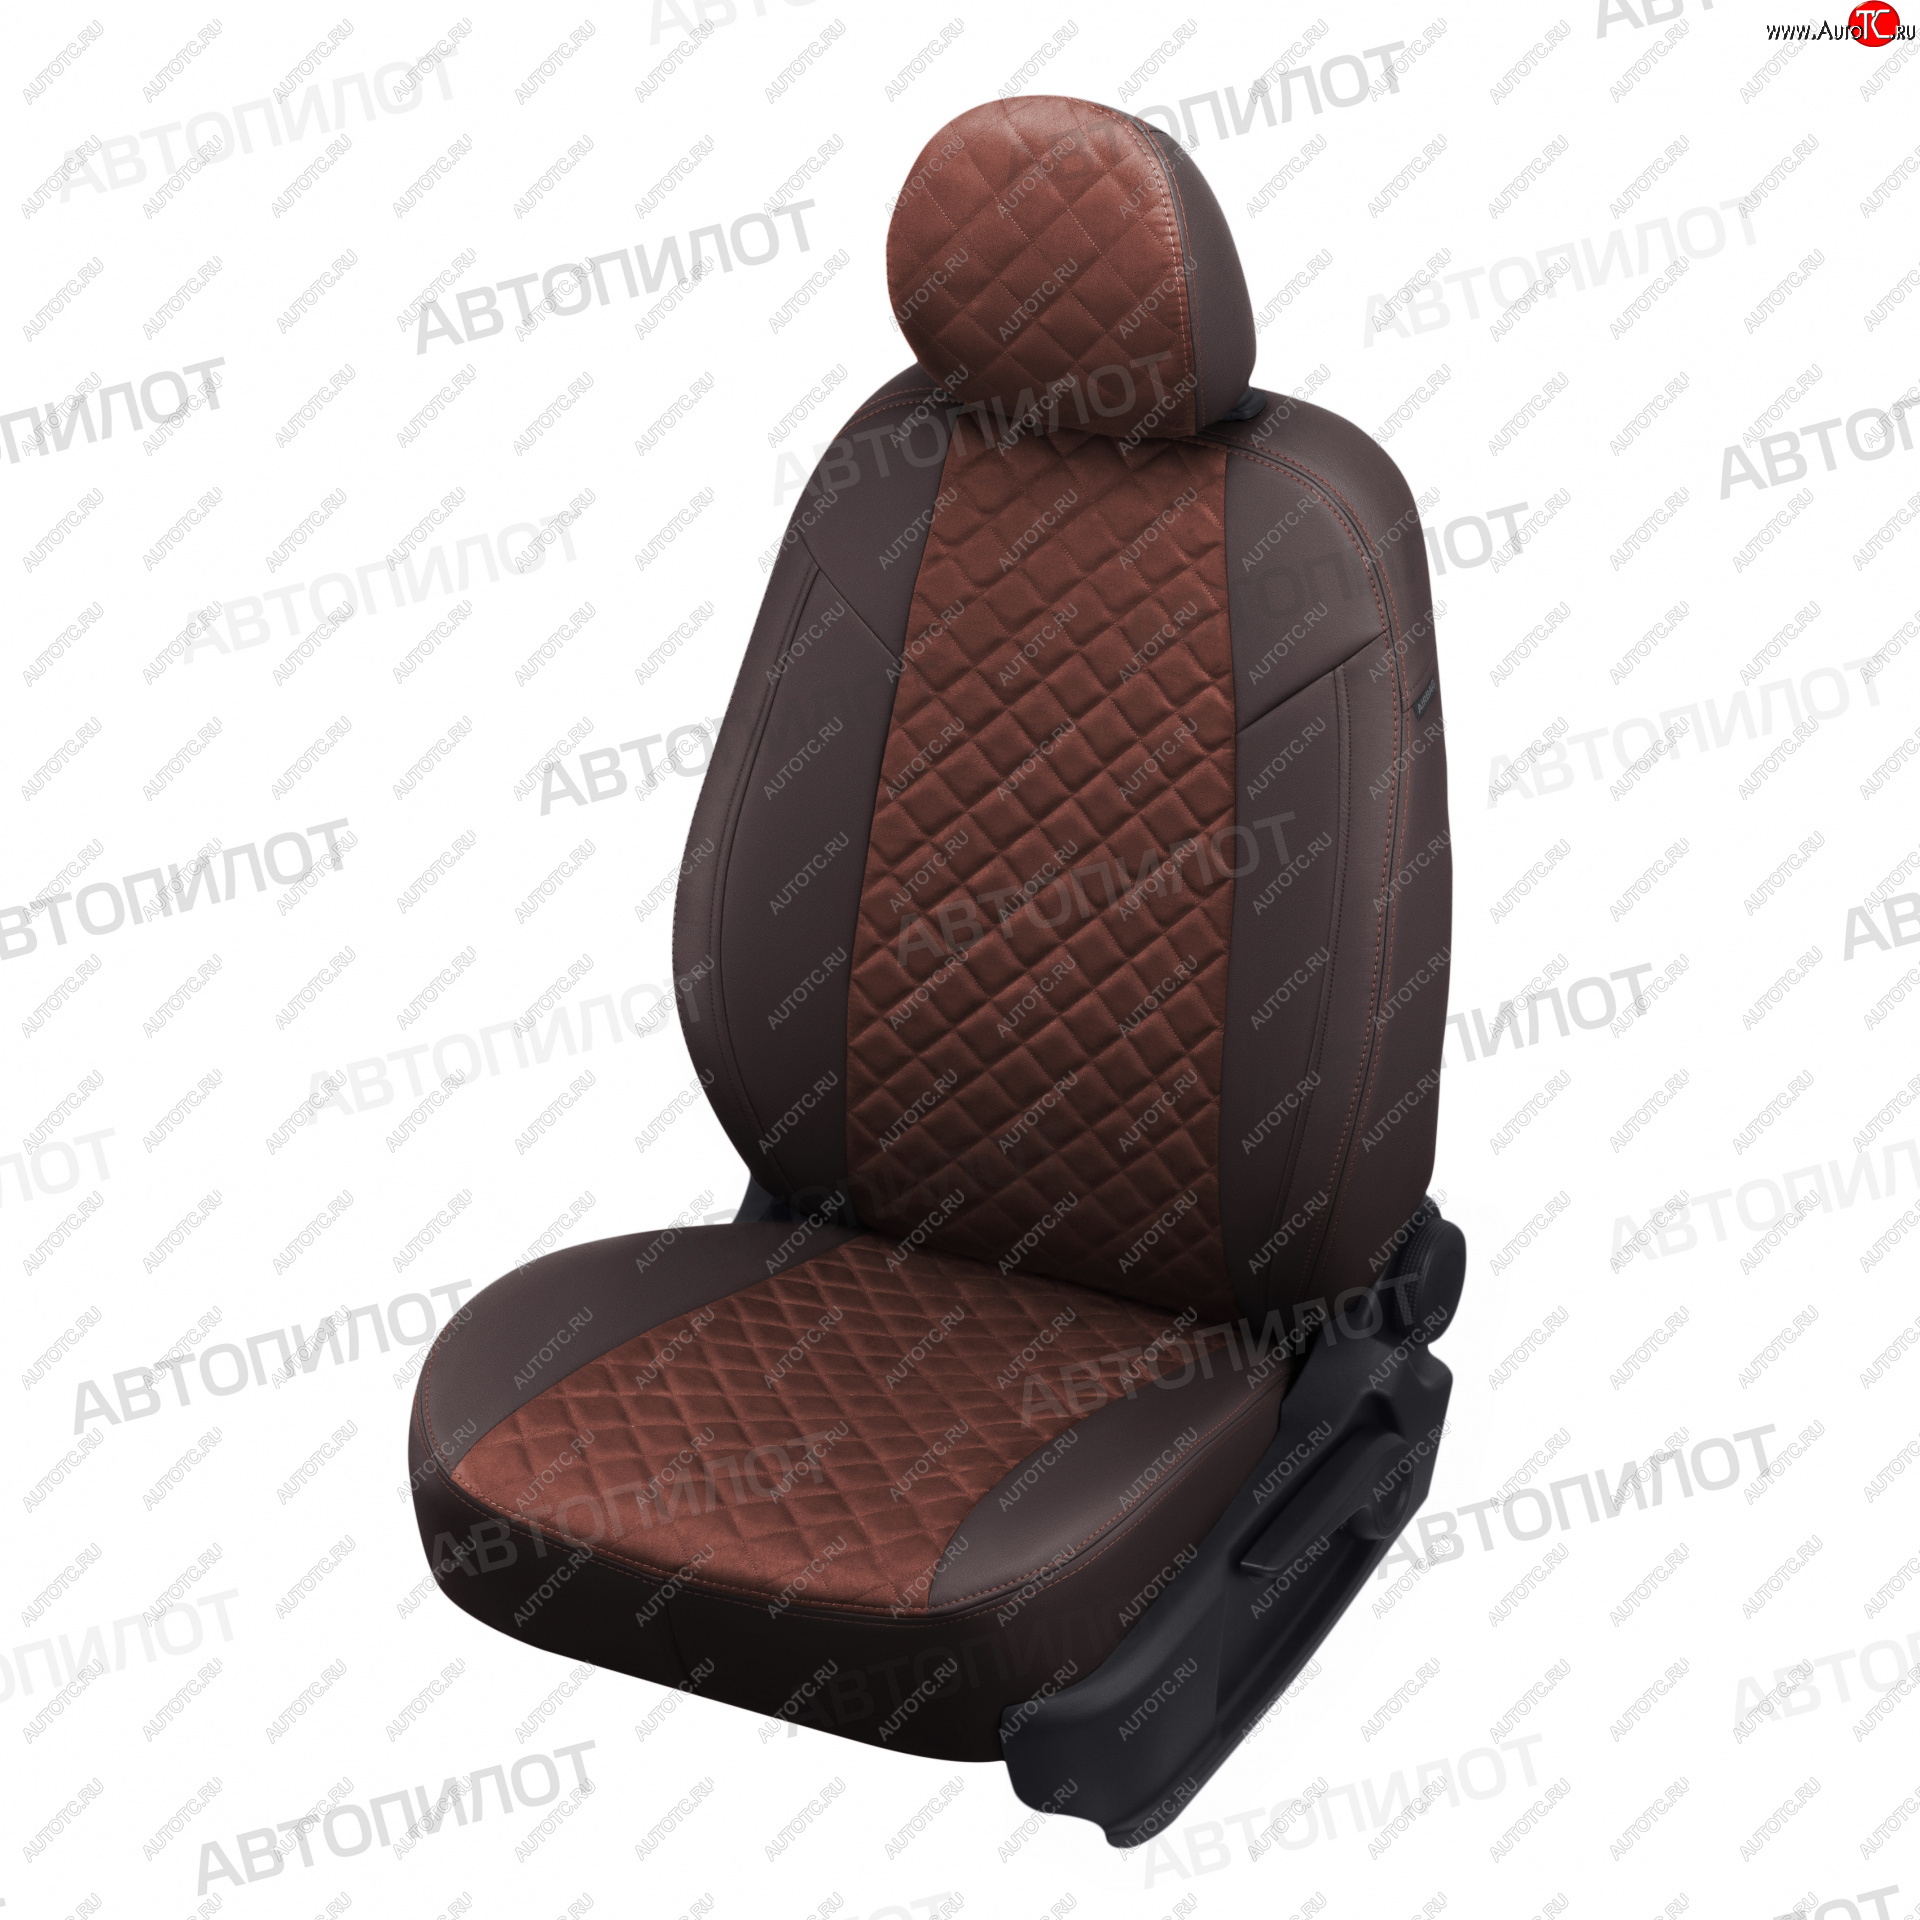 21 599 р. Чехлы сидений (9 мест, экокожа/алькантара) Автопилот Ромб  Ford Transit  3 (2006-2014) (шоколад)